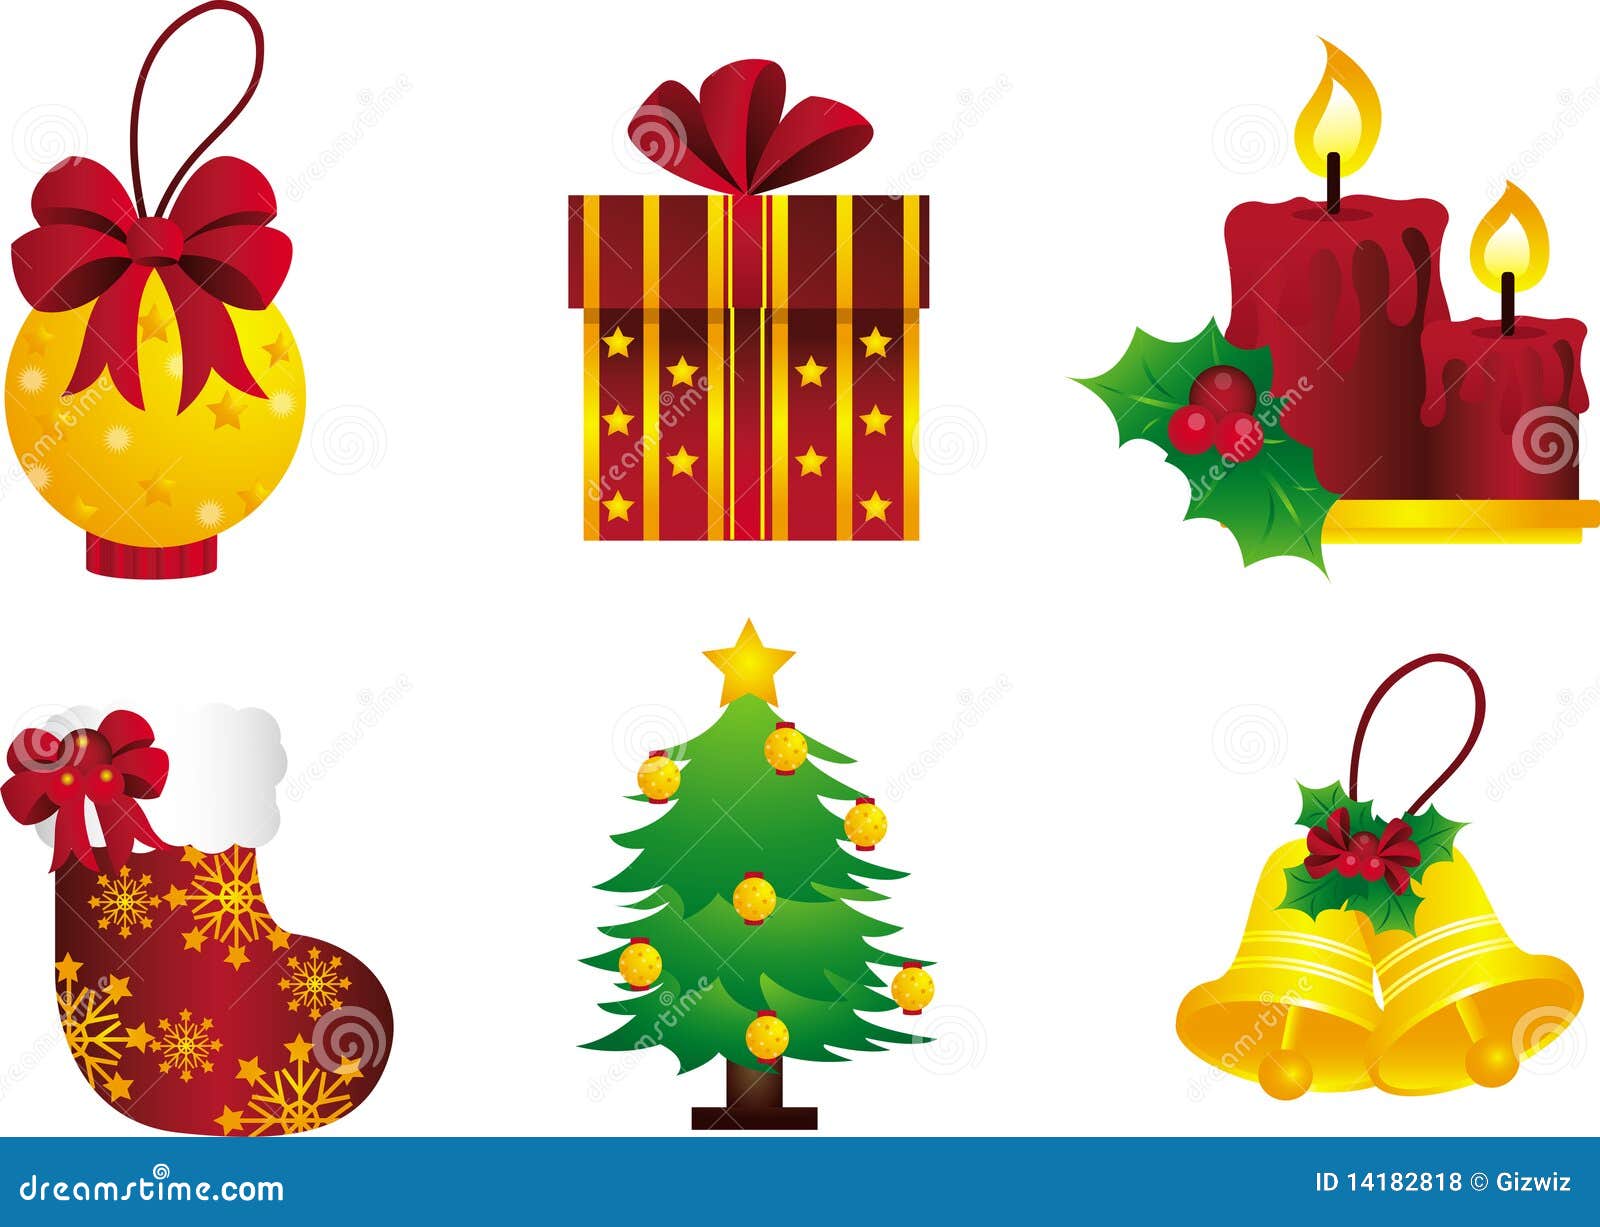 Golden Christmas stock vector. Illustration of greetings - 14182818